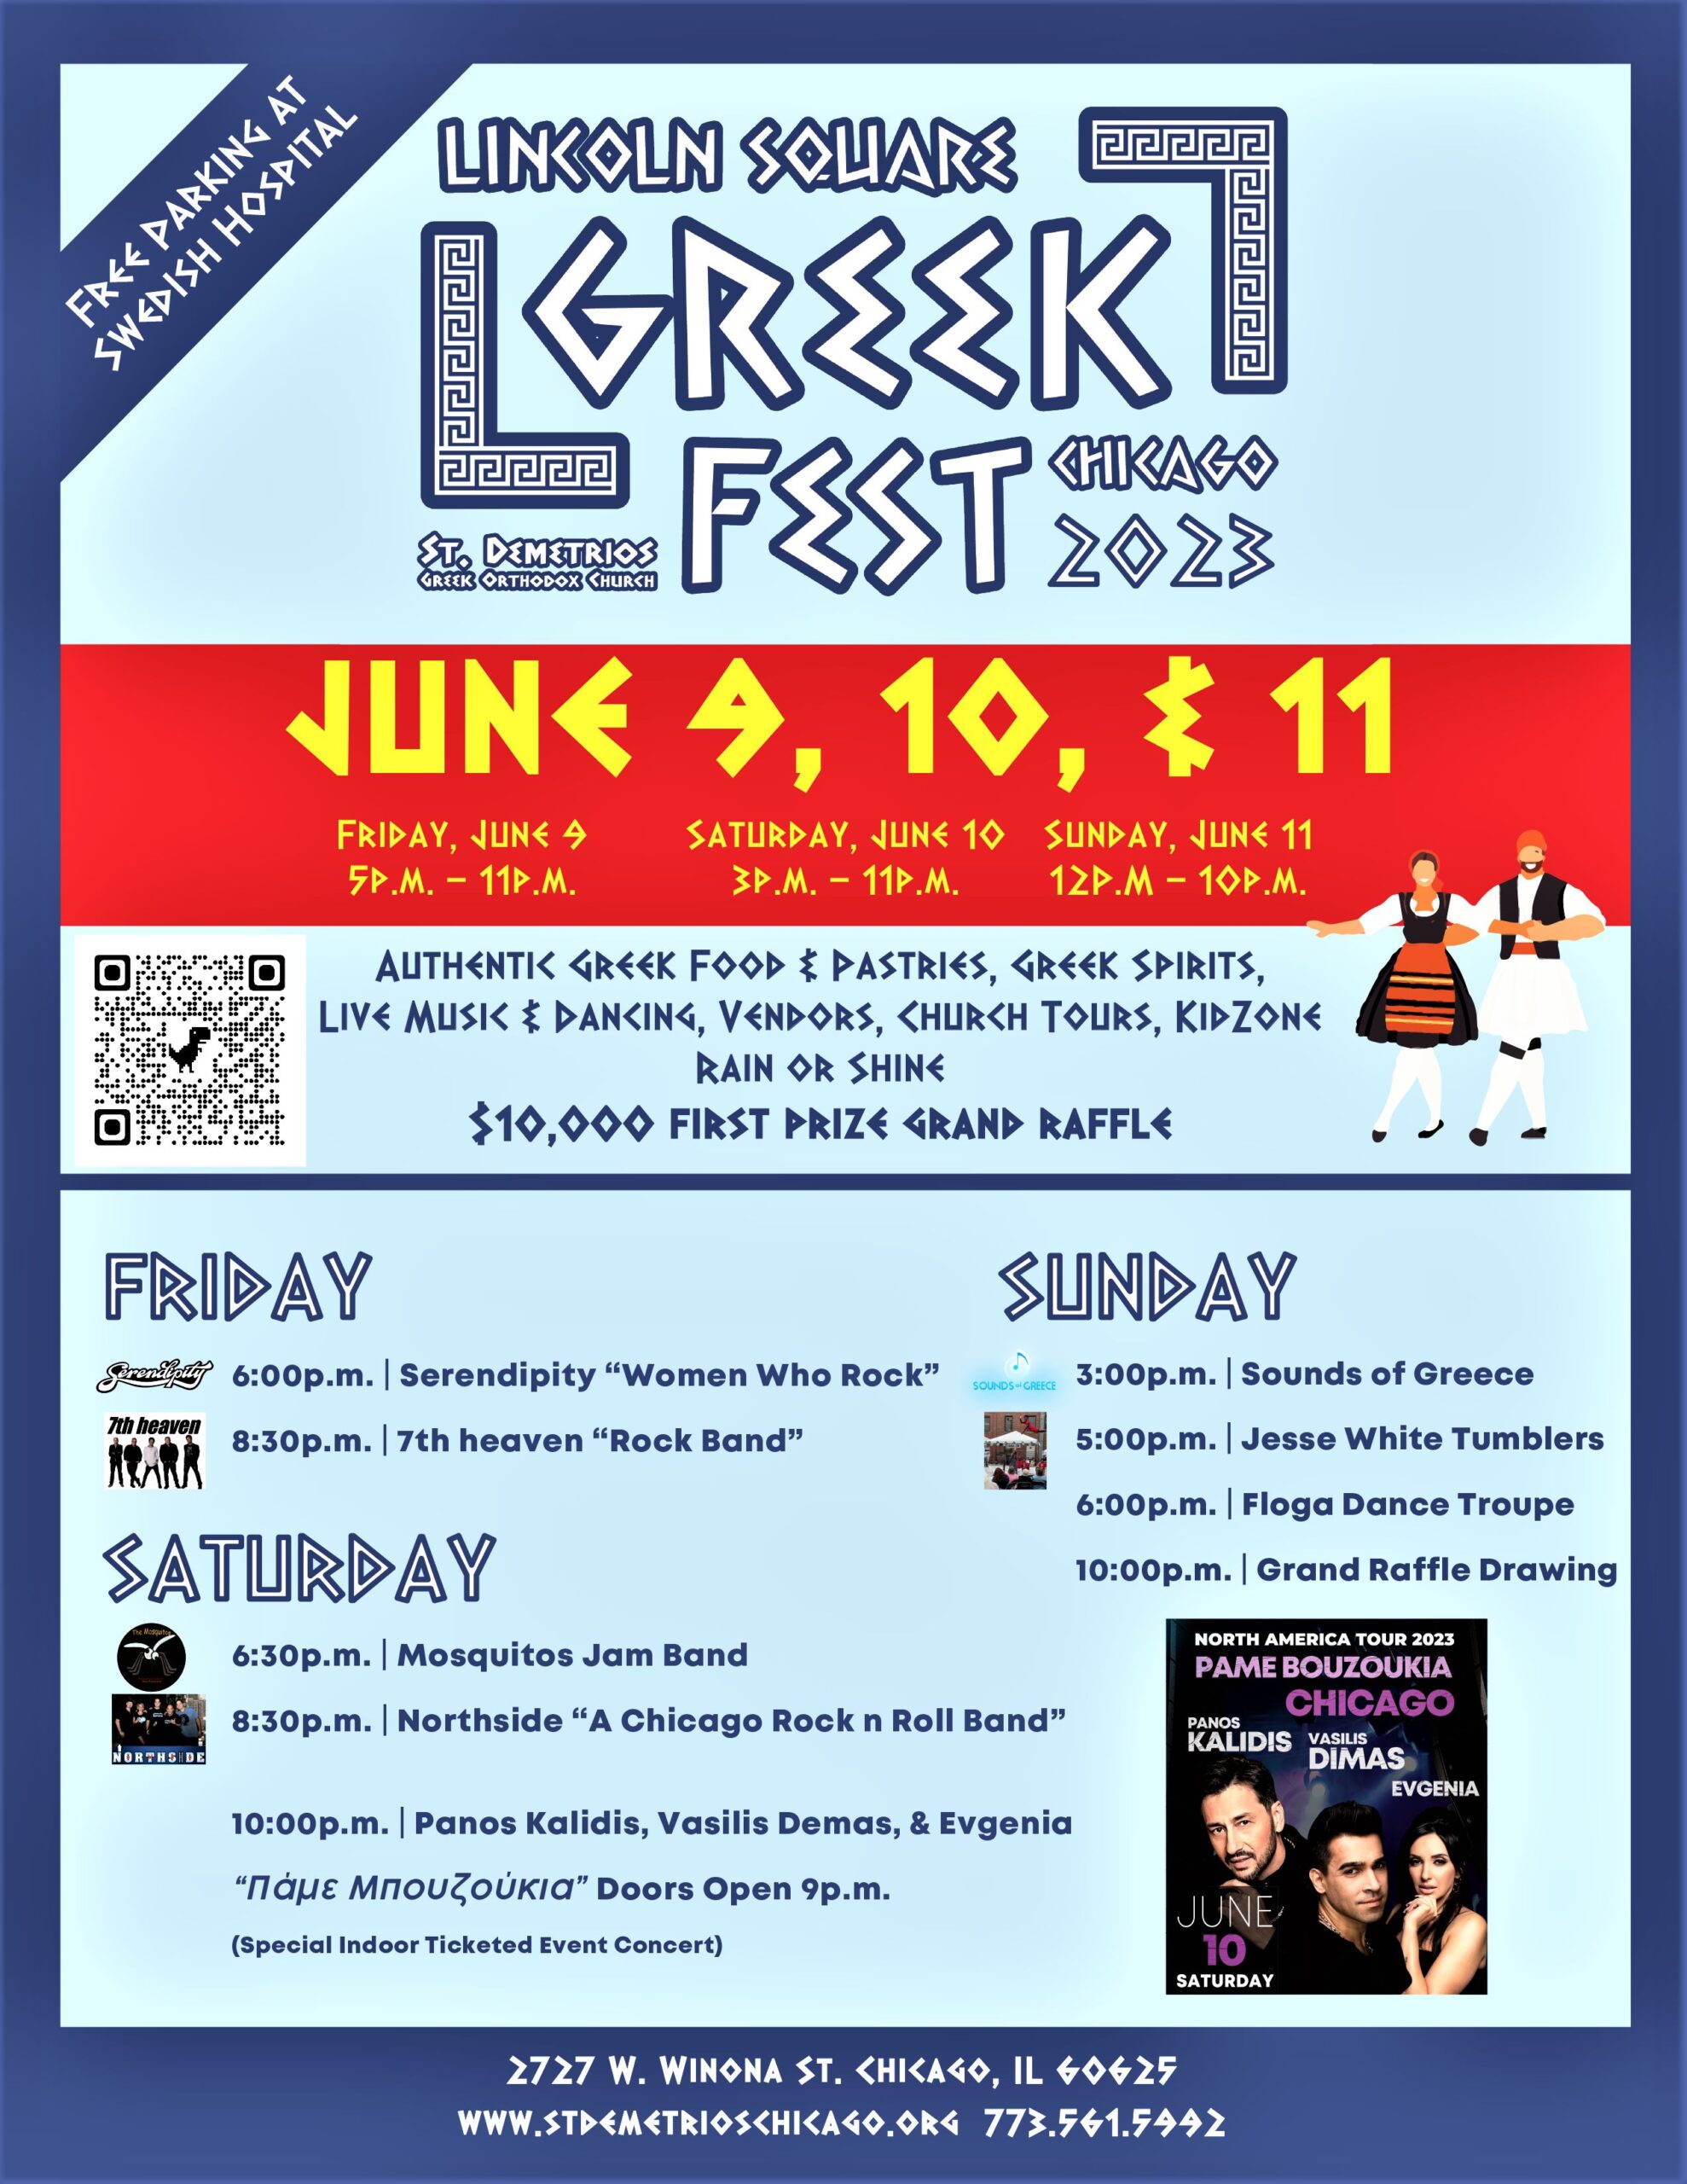 Lincoln Square Greekfest 2023 - The Greek Orthodox Metropolis of